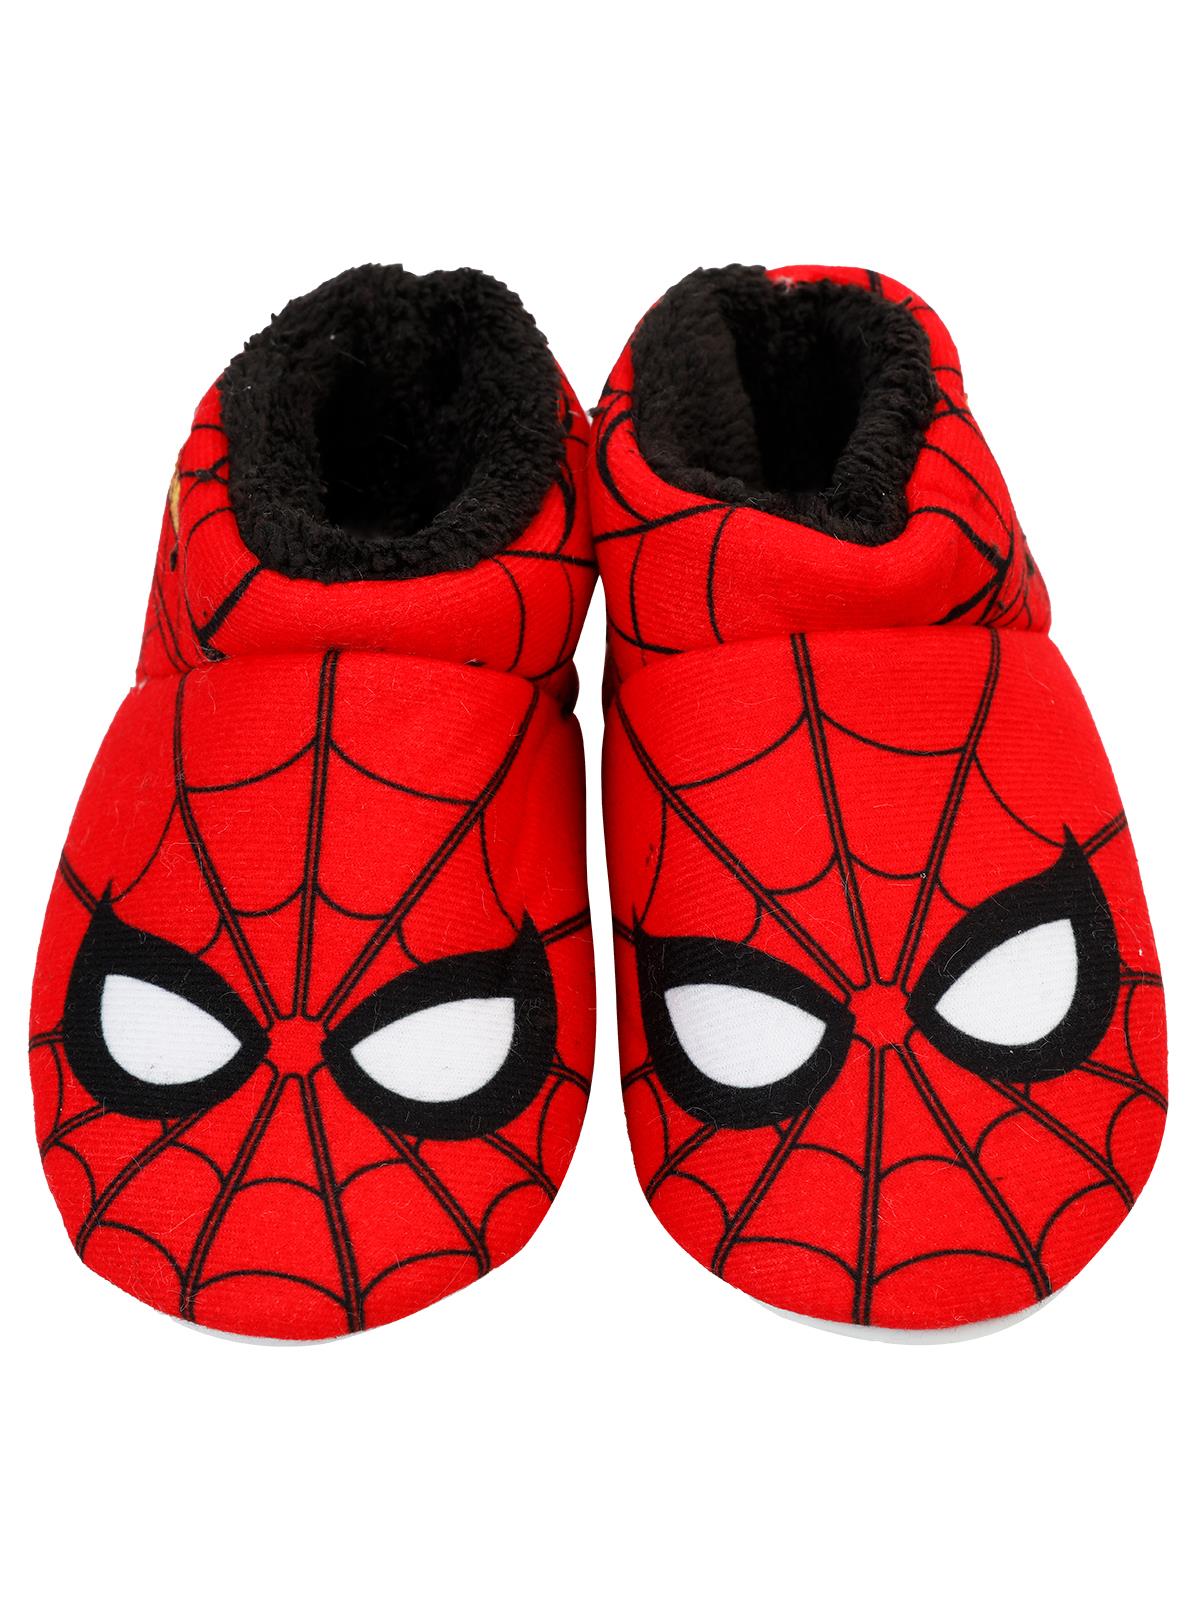 Spiderman Erkek Çocuk Bot Panduf 26-28 Numara  Kırmızı